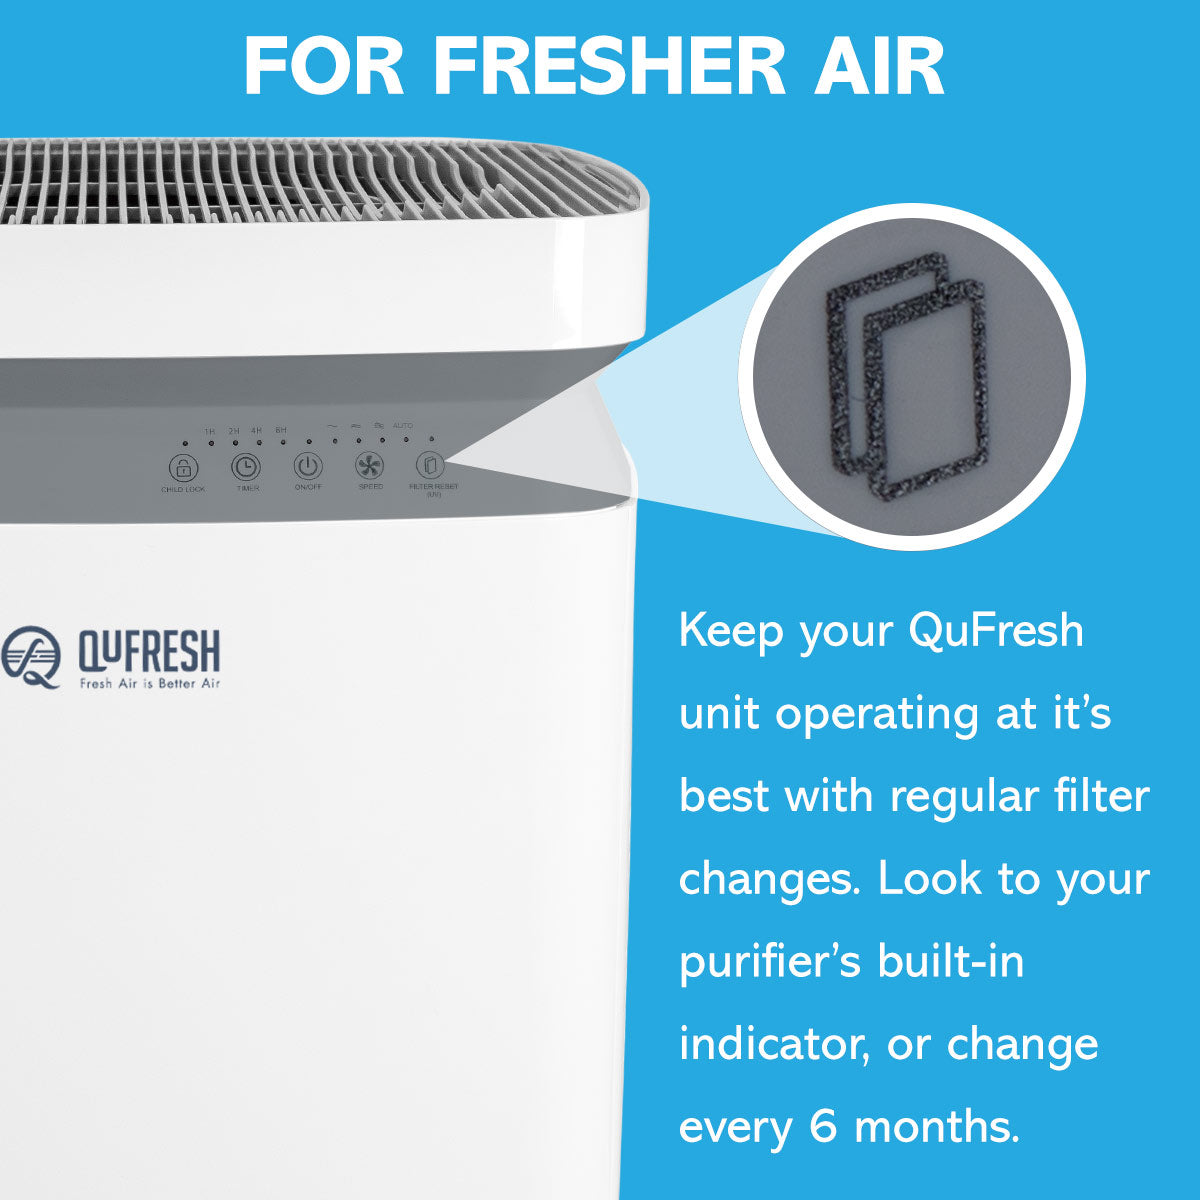 QFAP-950 HEPA Air Scrubber Replacement Filter 2-Pack